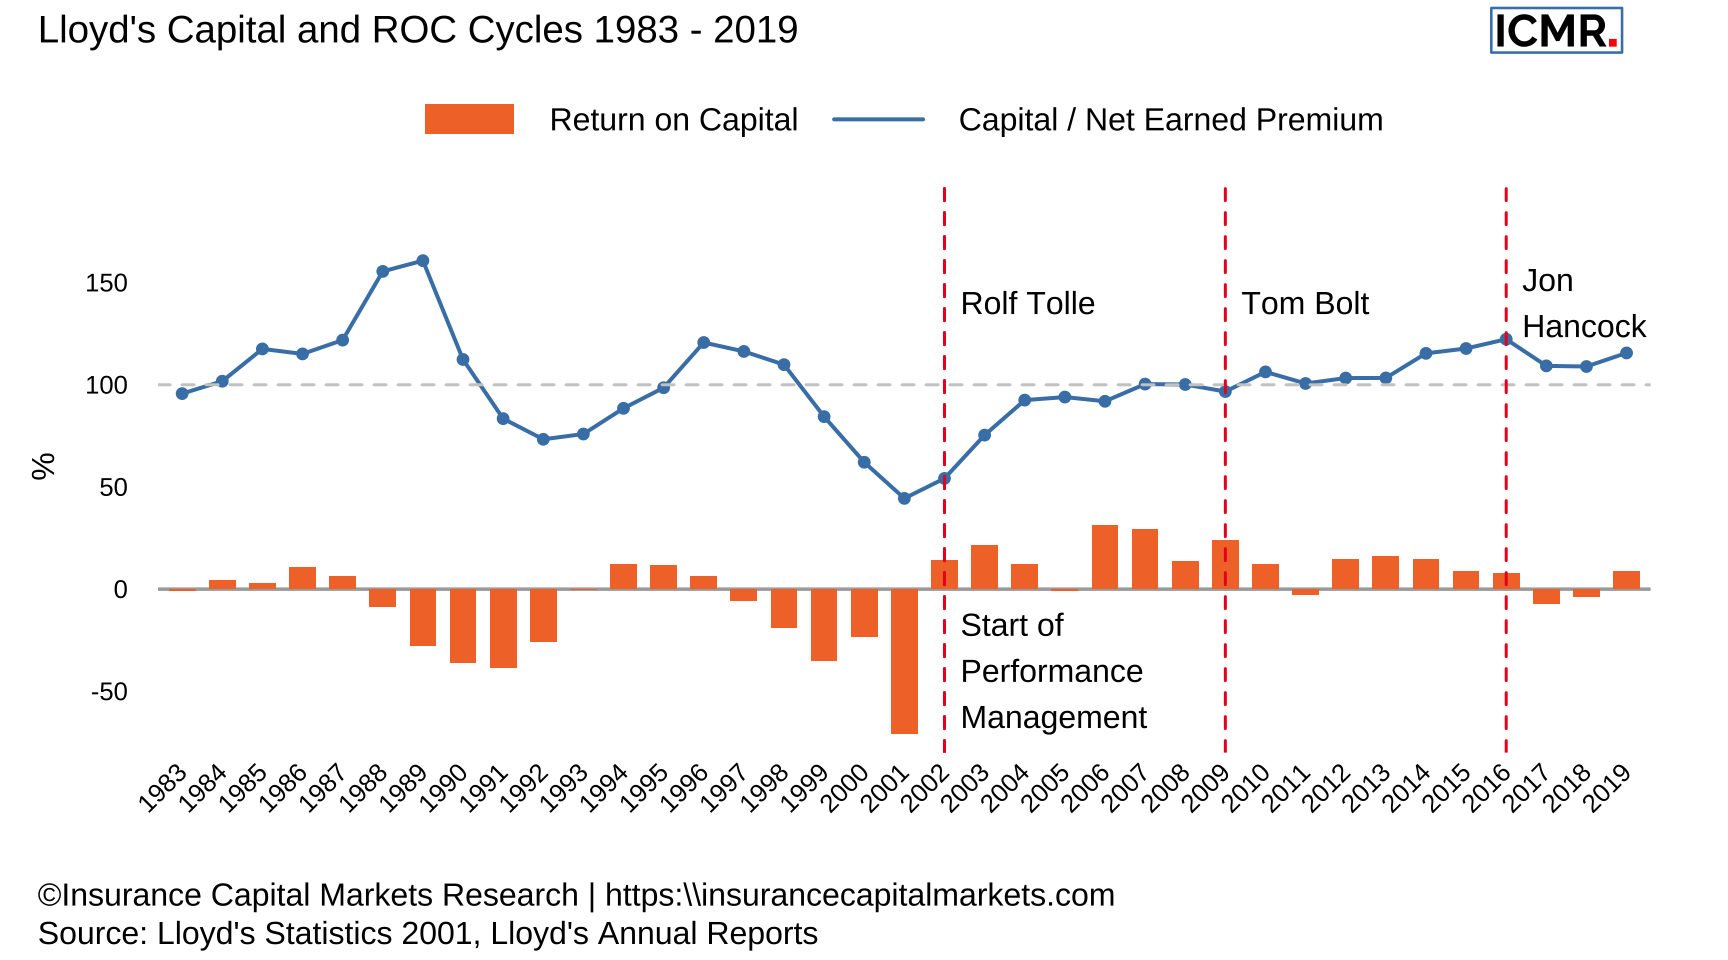 Lloyd's Capital and ROC Cycles 1983 - 2019